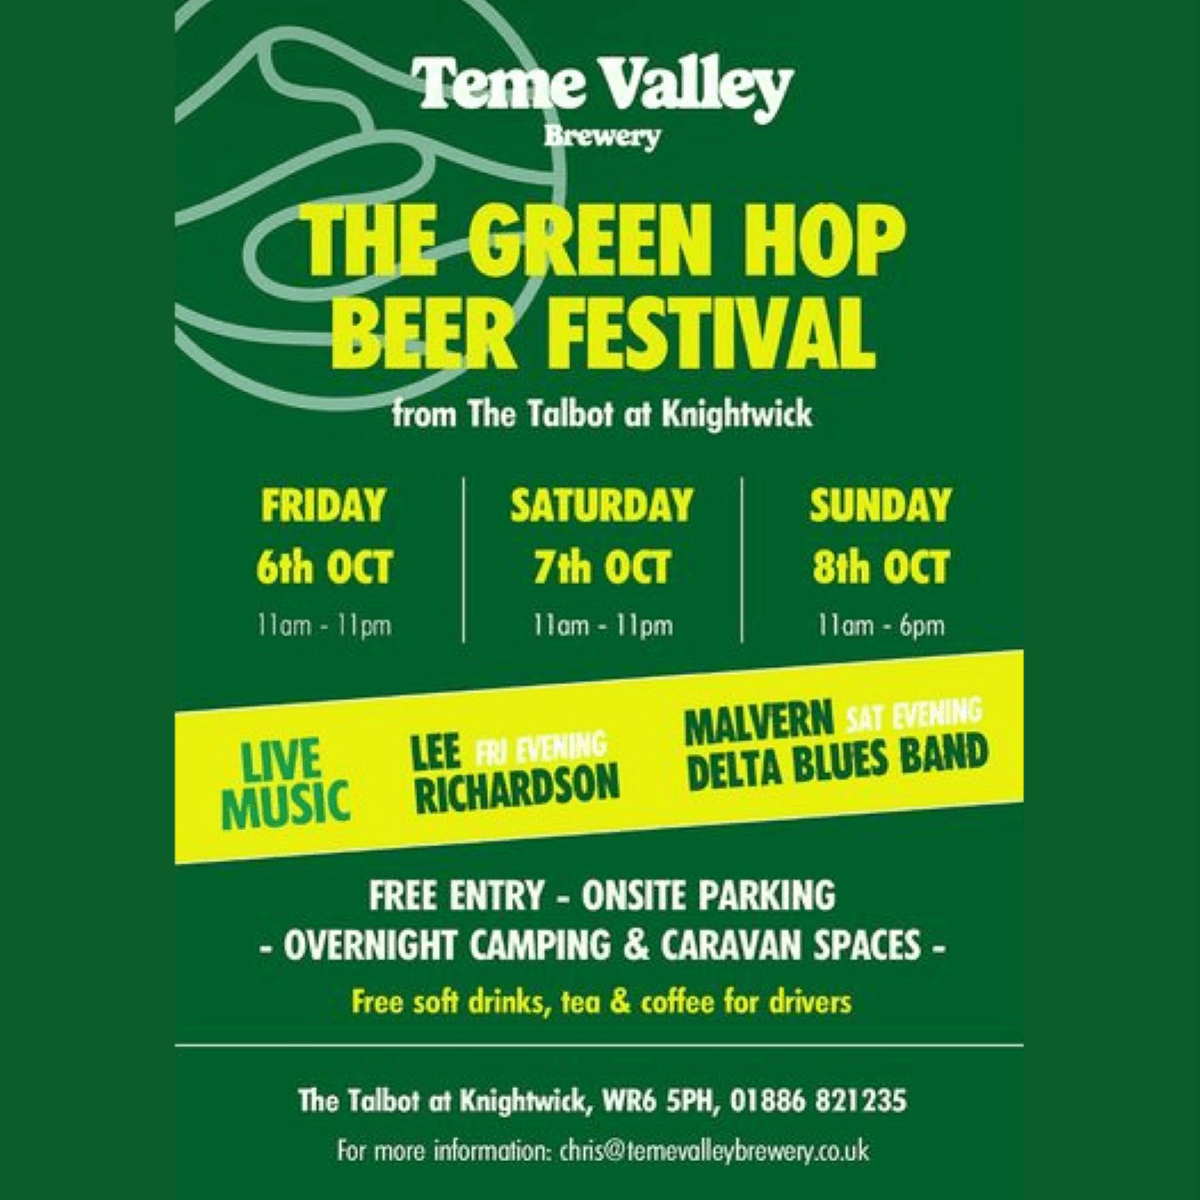 Dark Green flyer for a beer festival